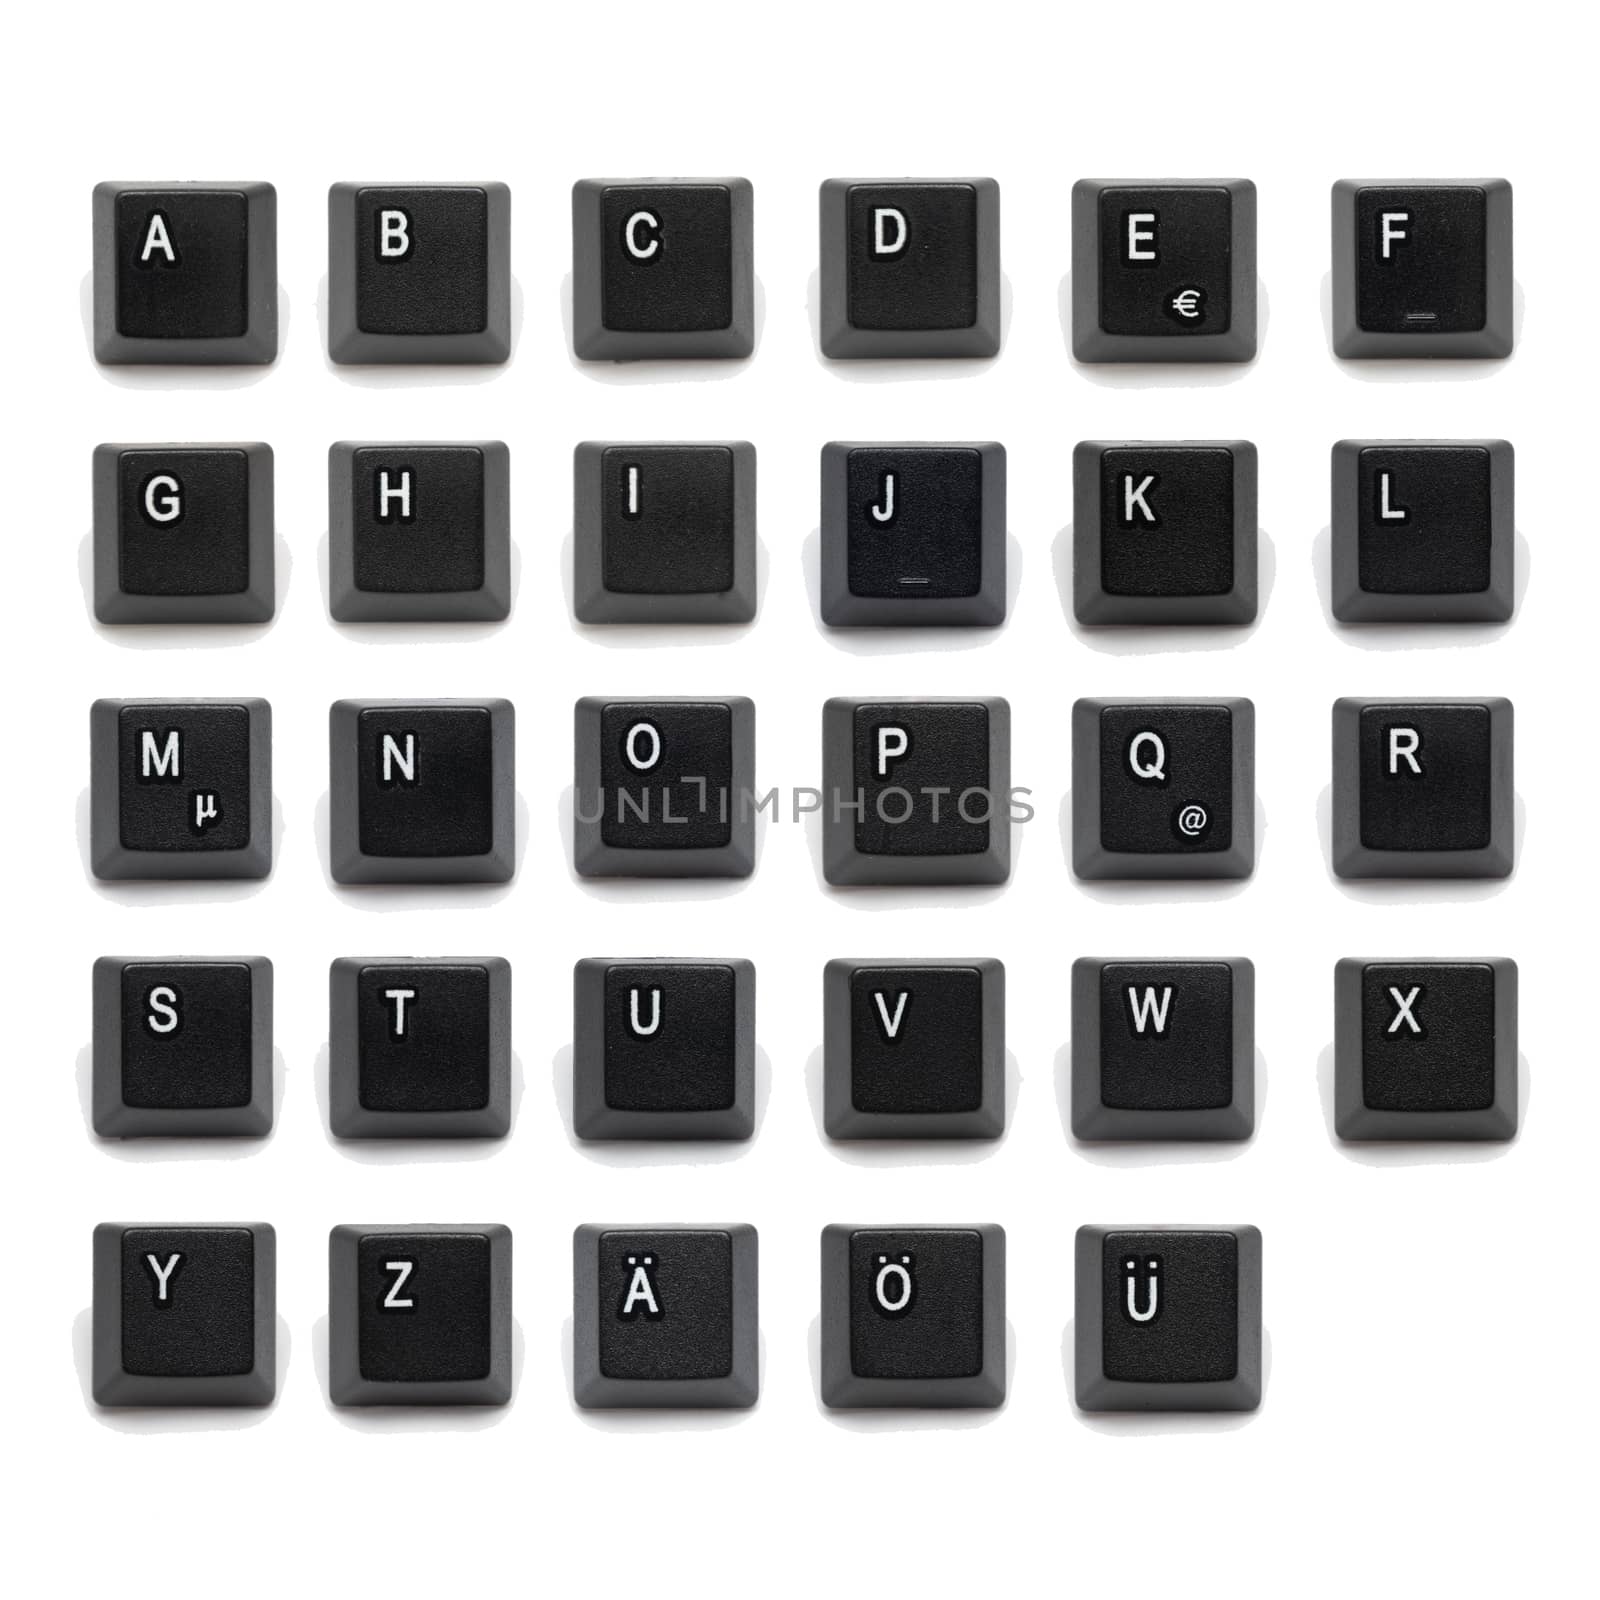 Alphabet black keys from keyboard key every letter by MXW_Stock